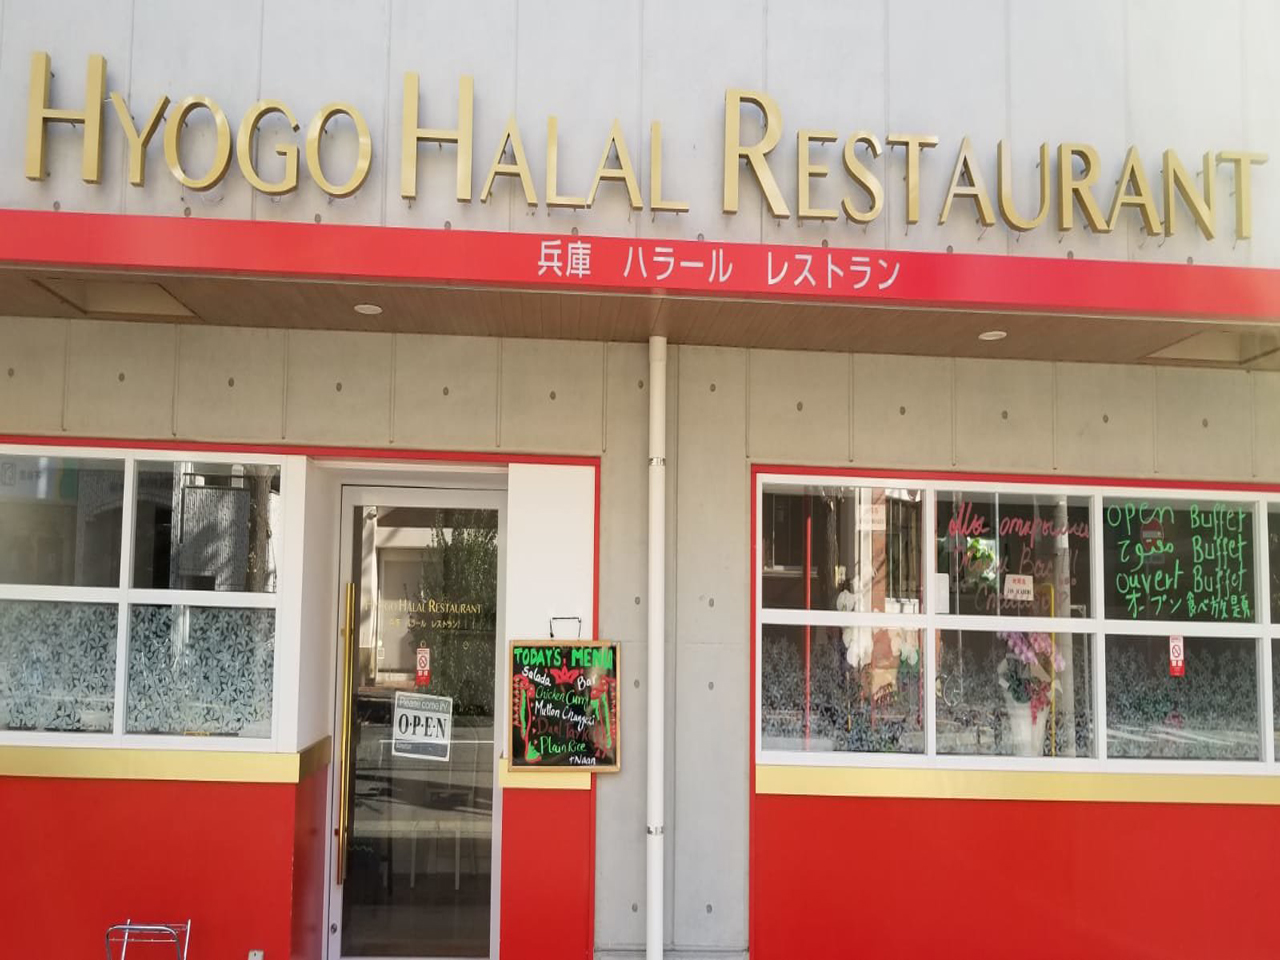 Halal Restaurant in Hyogo, Japan